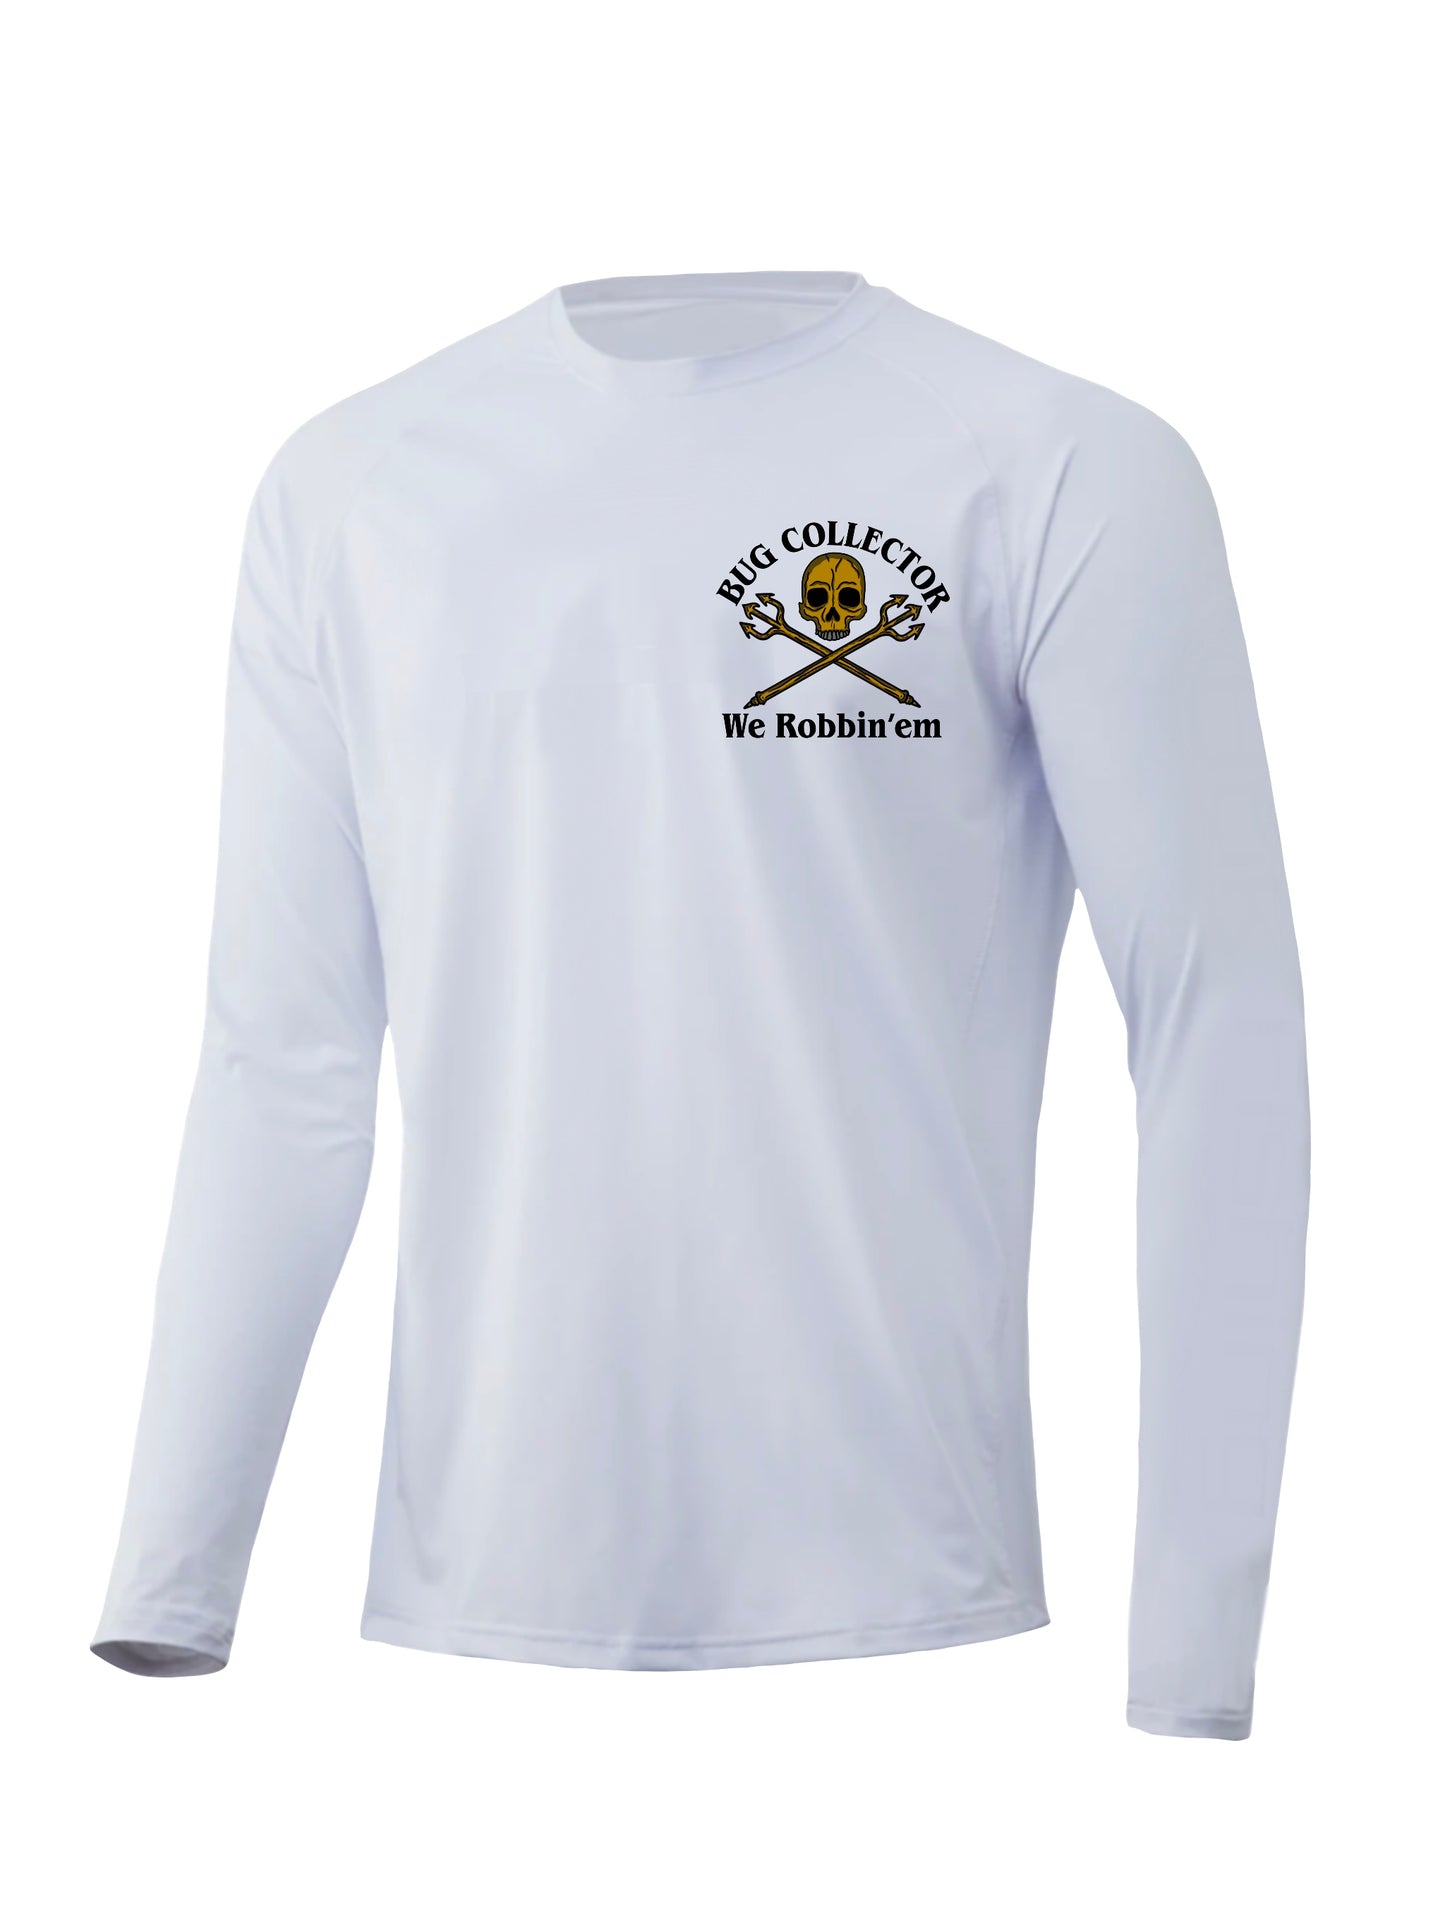 Long Sleeve UPF Shirt - Bug Collector